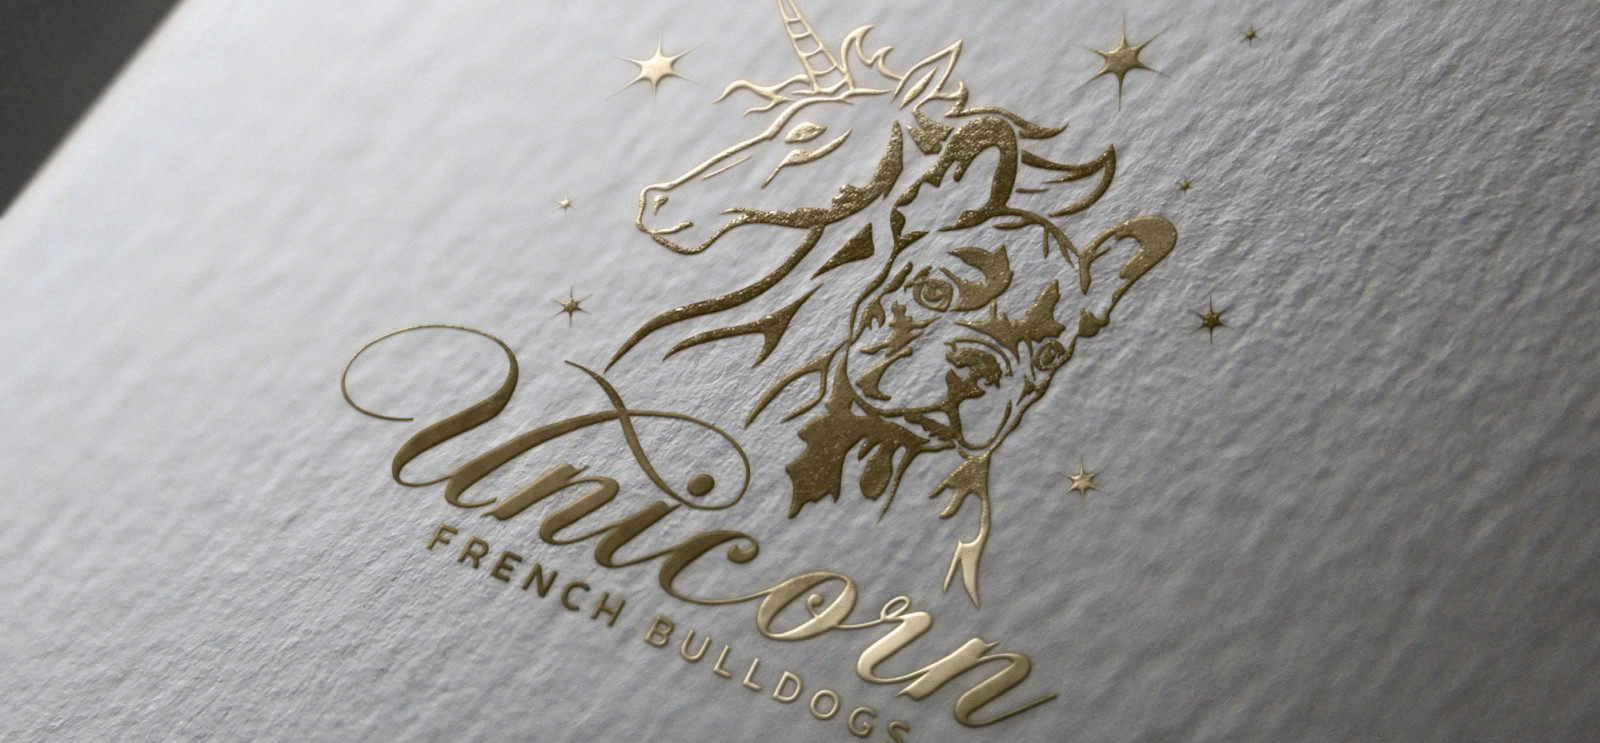 French bulldogs kennel logo